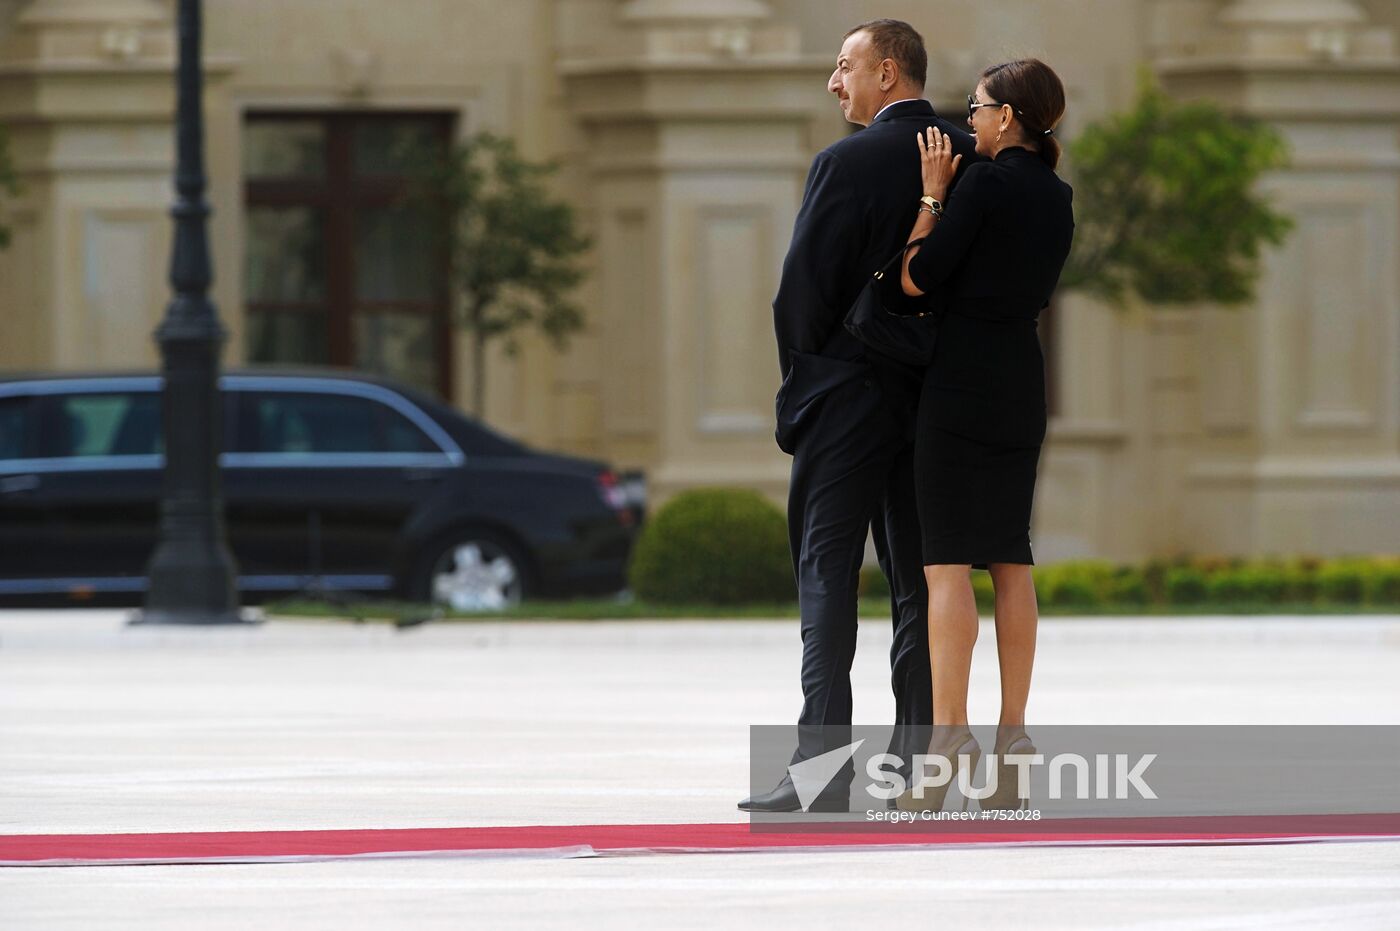 Azerbaijani President Ilkham Aliyev and his wife, Mekhriban